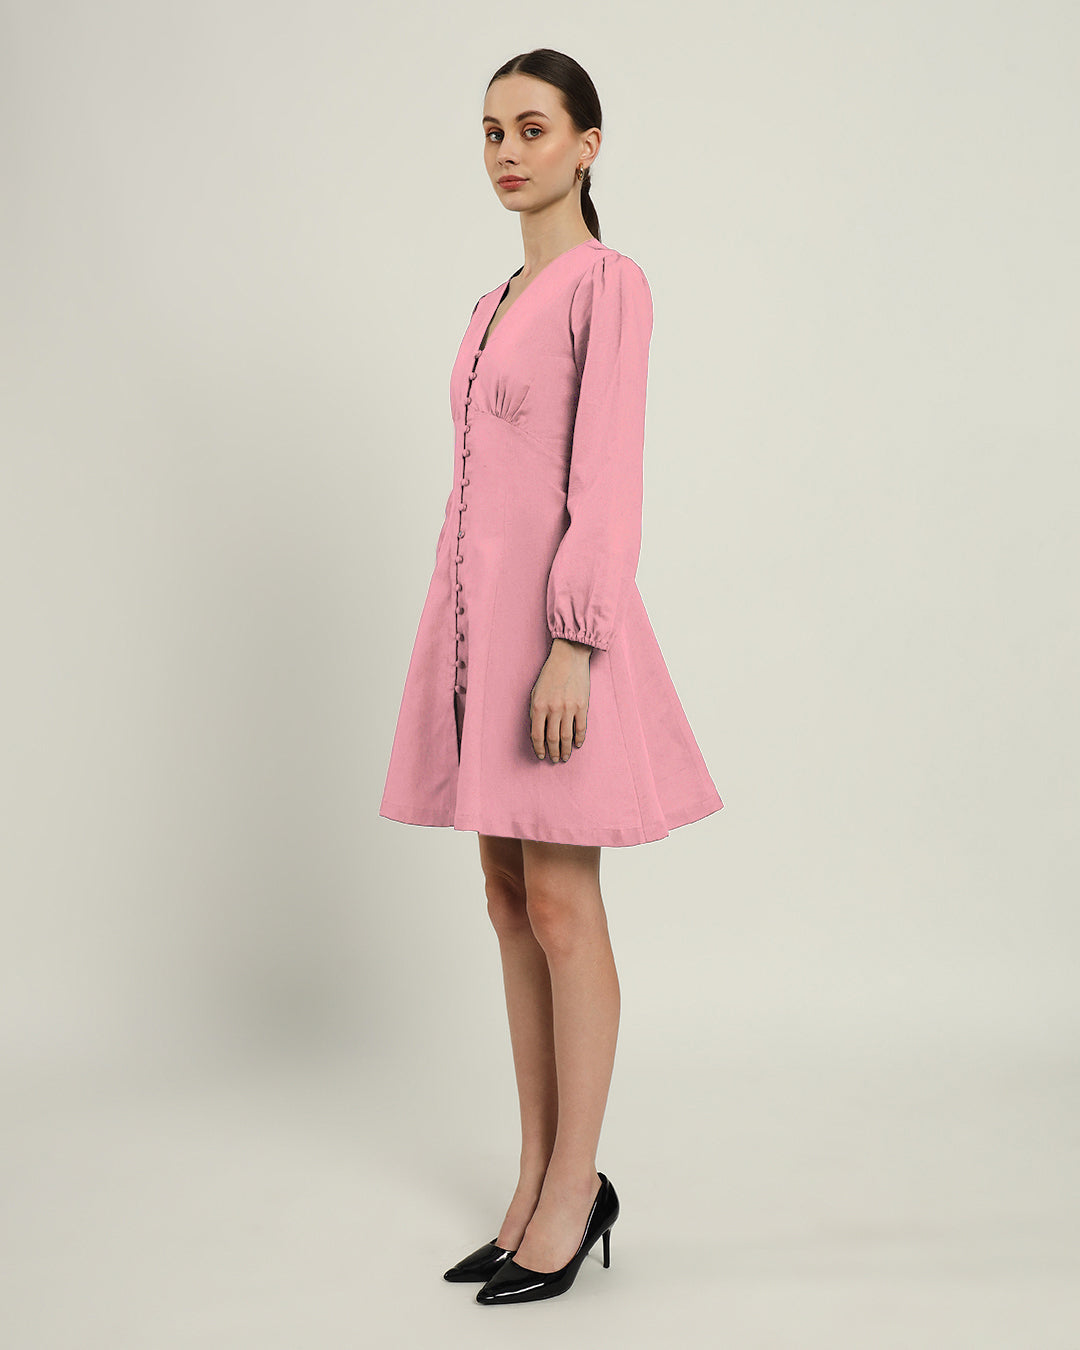 The Dafni Fondant Pink Cotton Dress